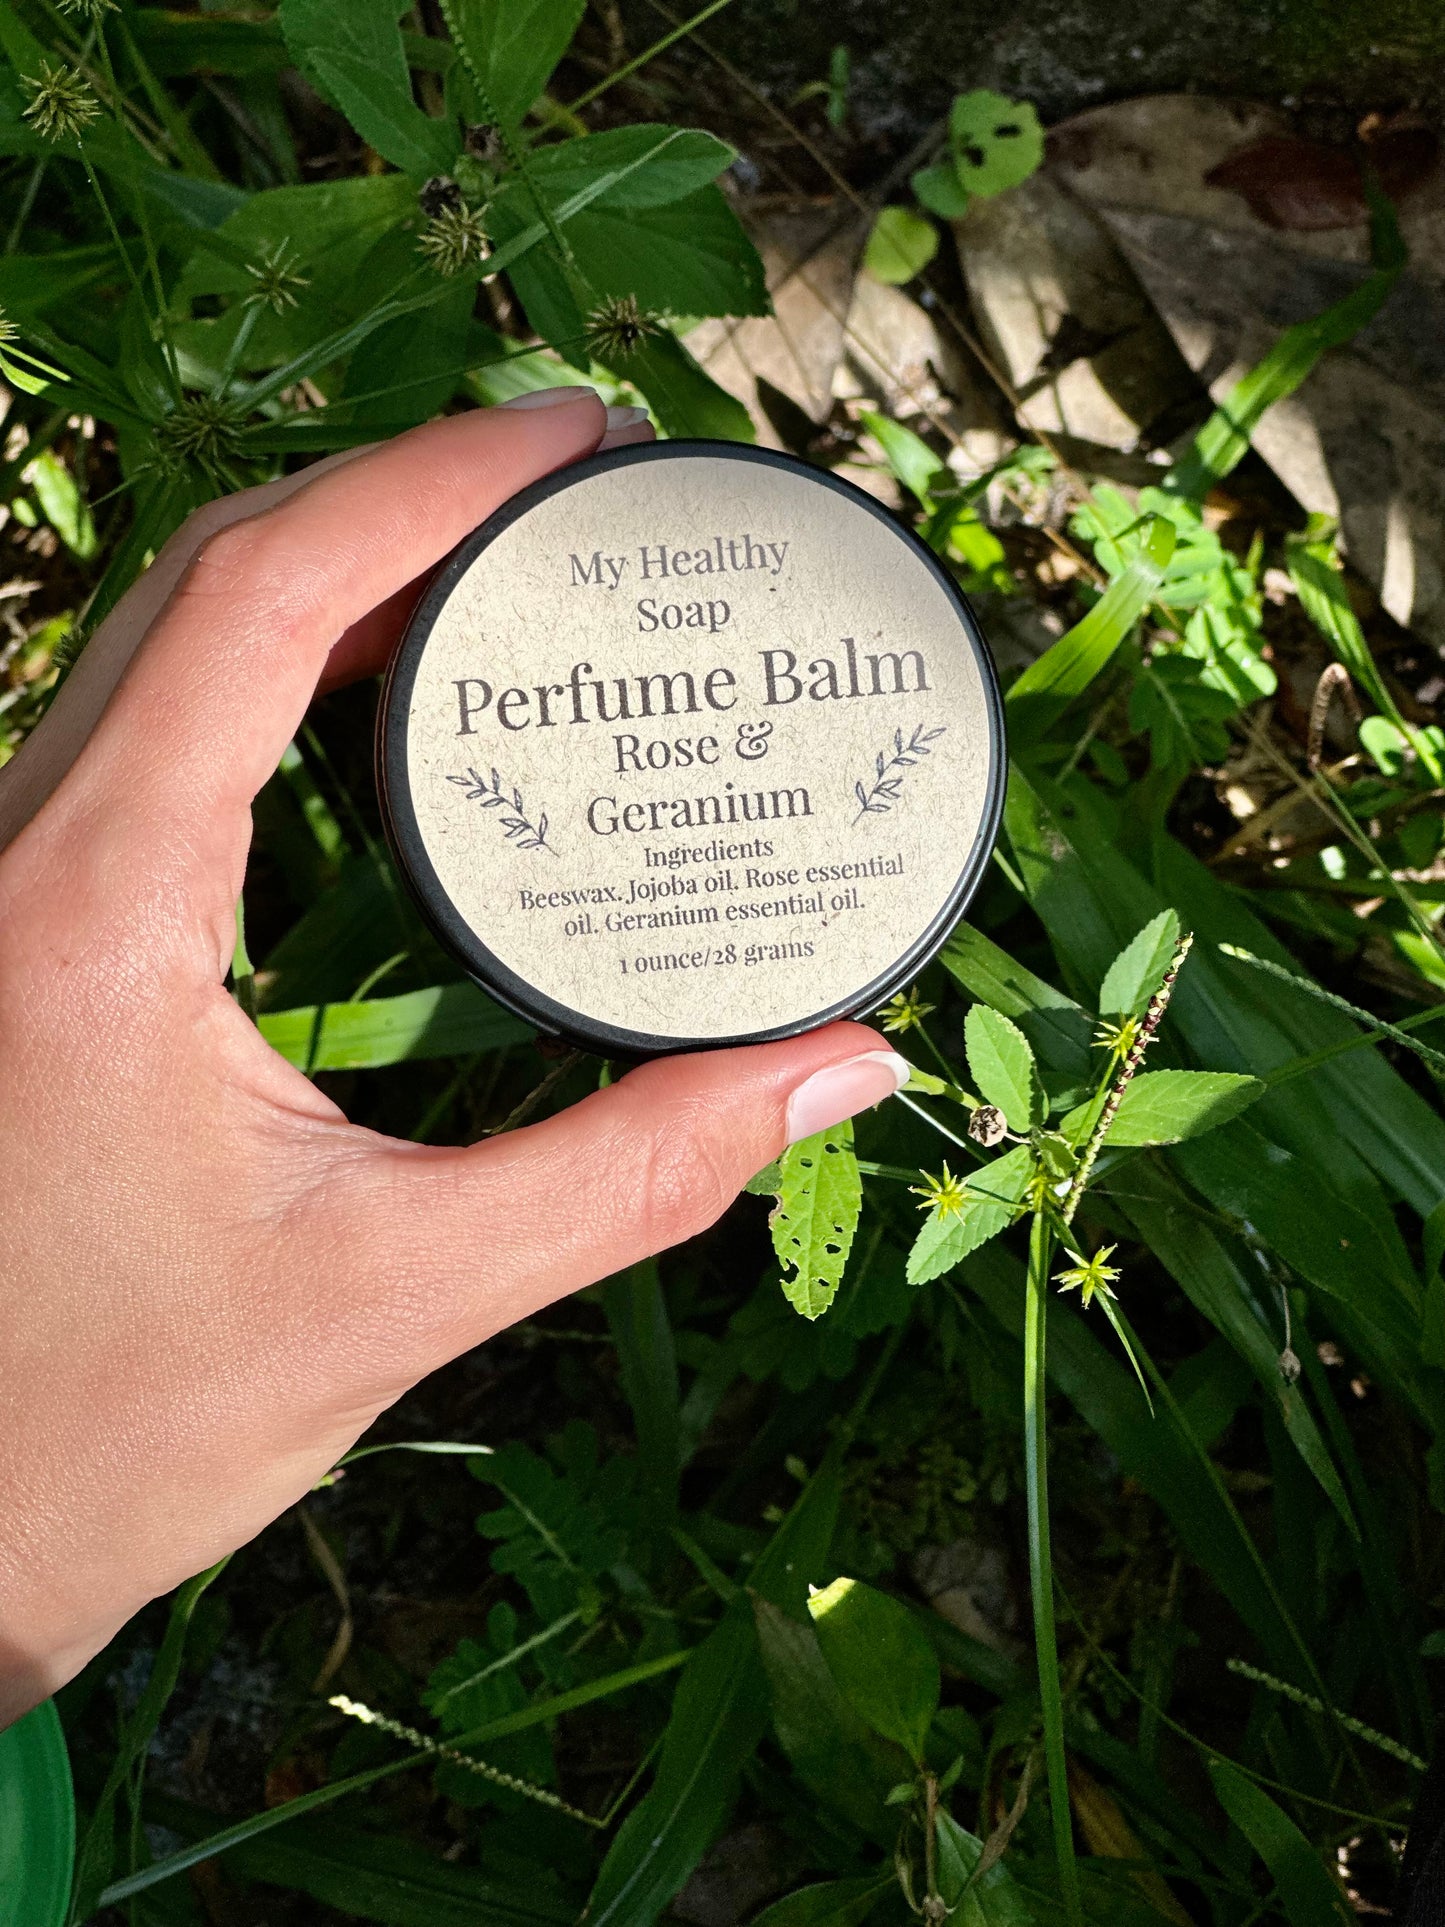 Perfume Balm - Scented with rose and geranium essential oils